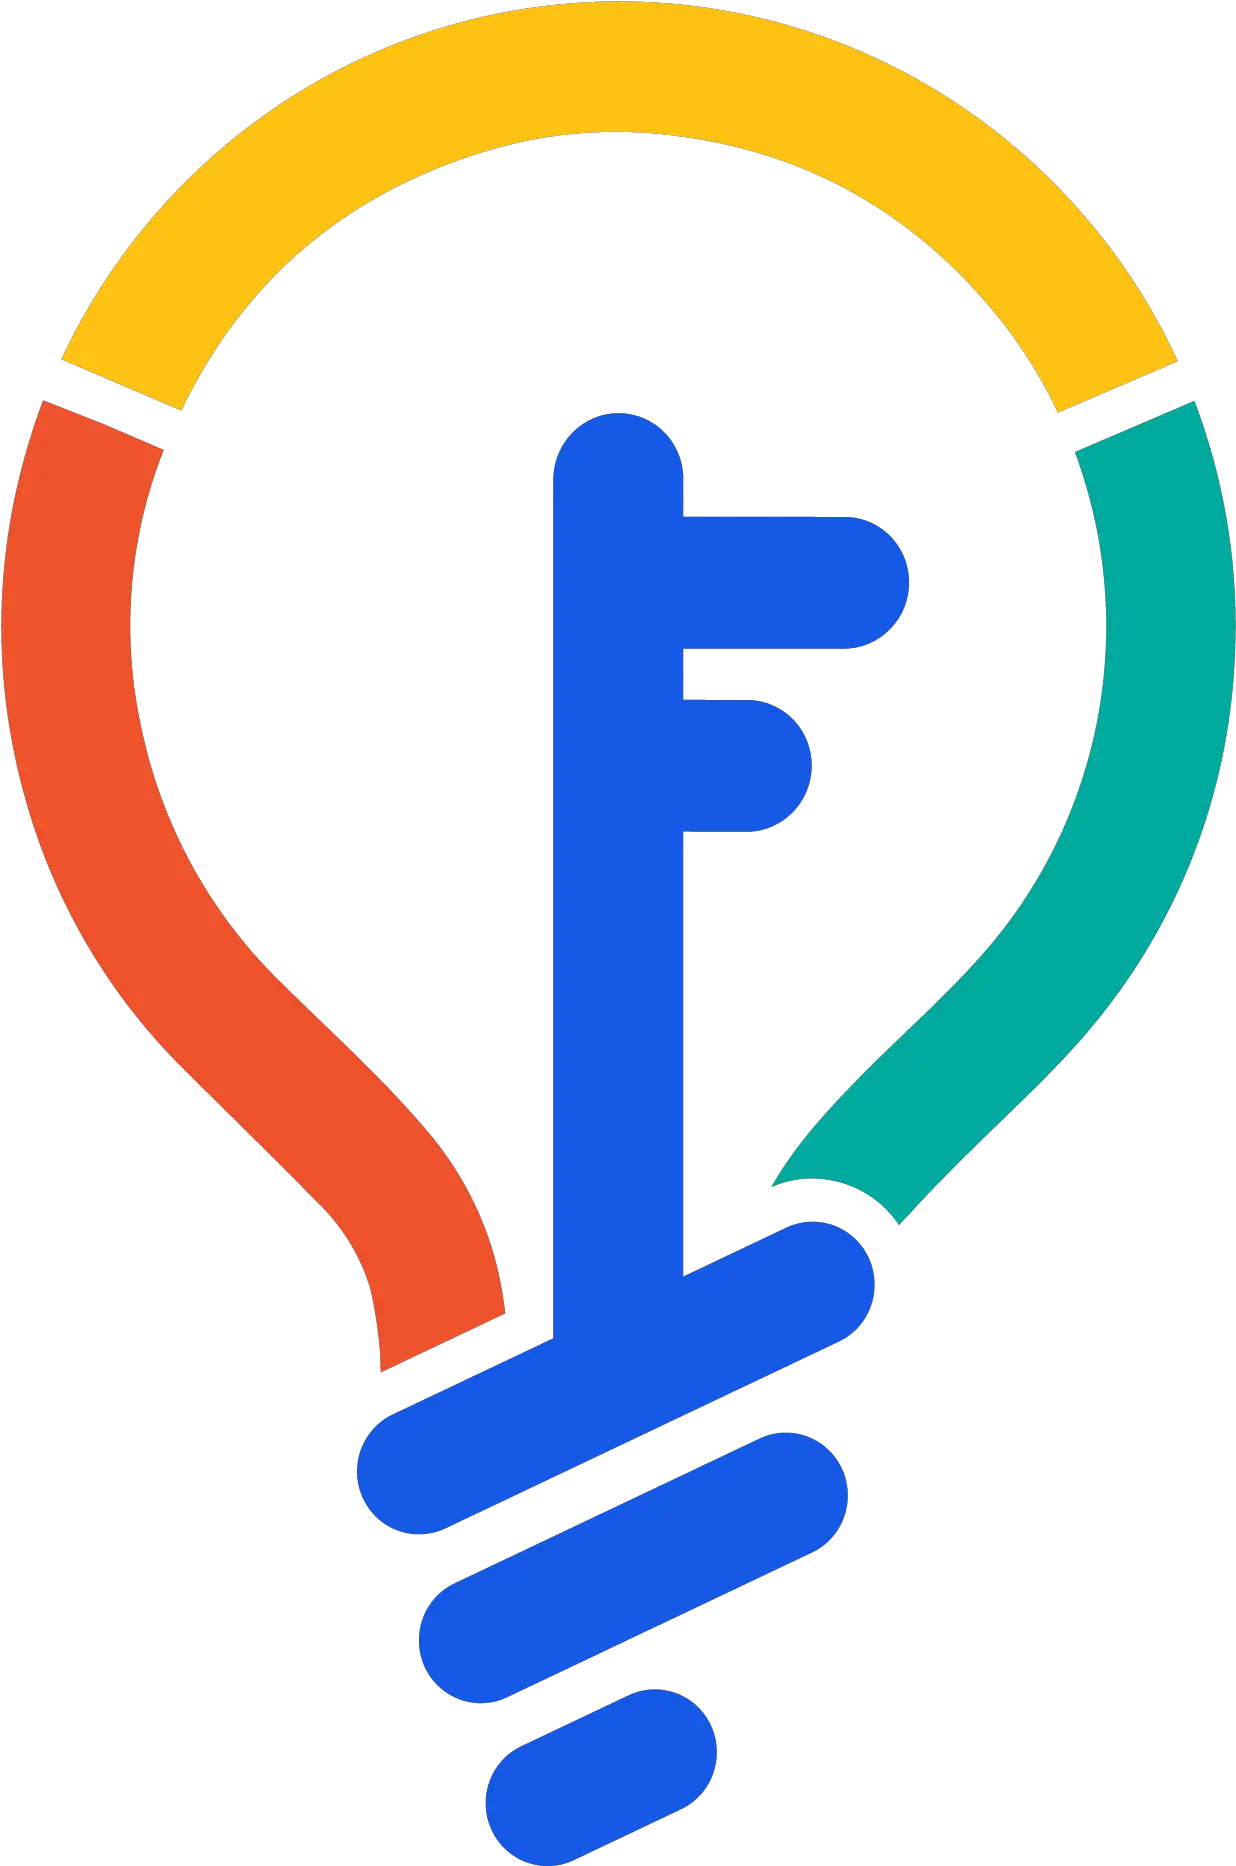 Filebulb And Key Logopng Wikipedia Bulb And Key Bulb Png